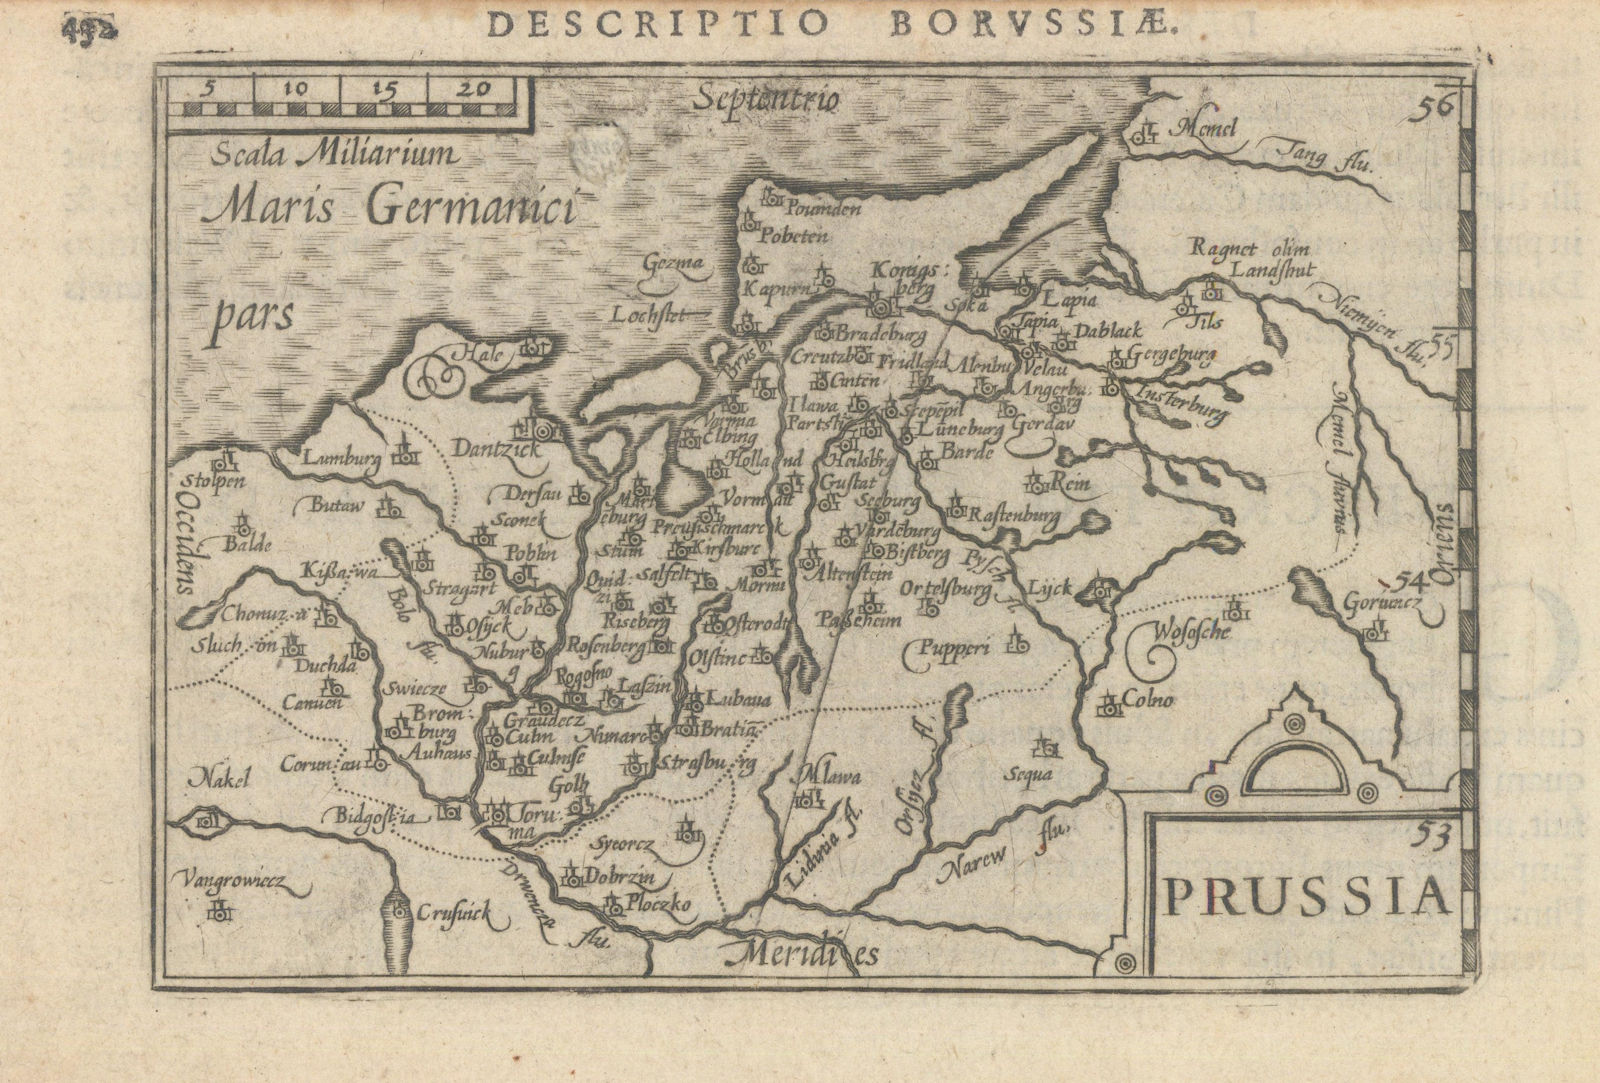 Borussiae / Prussia by Bertius/ Langenes. Northern Poland & Kaliningrad 1603 map